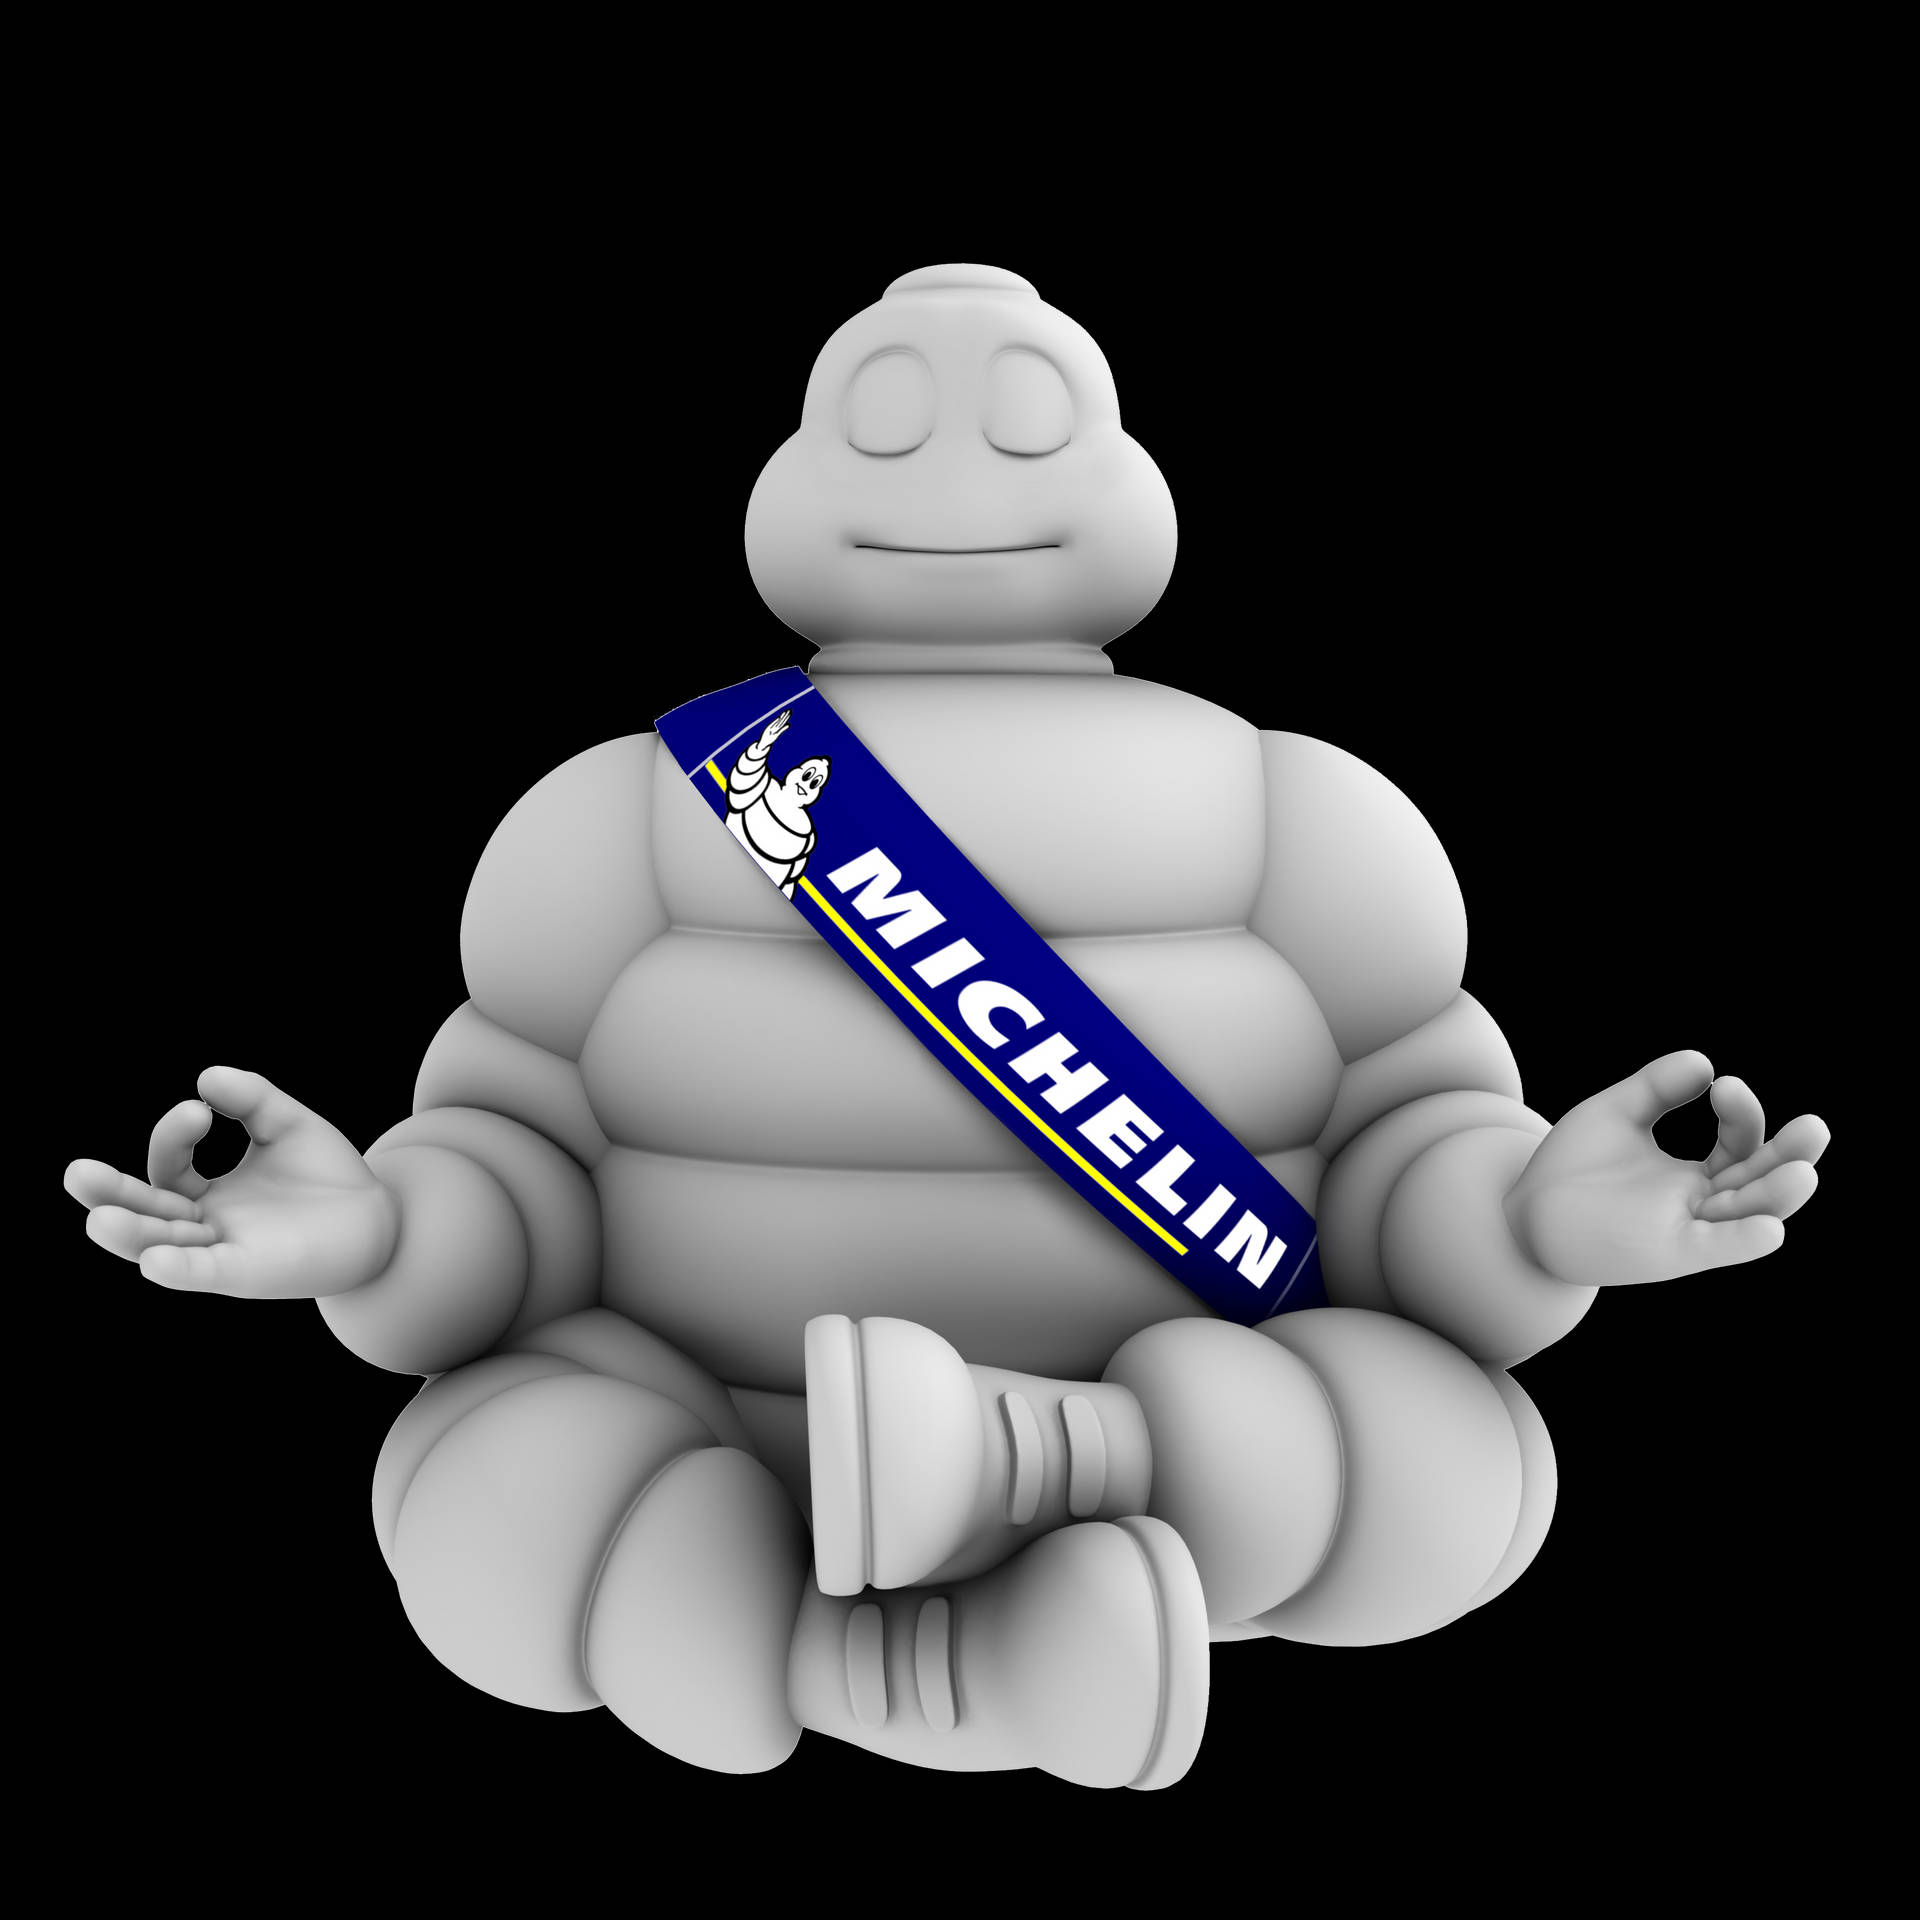 Michelin Meditating Mascot Wallpaper